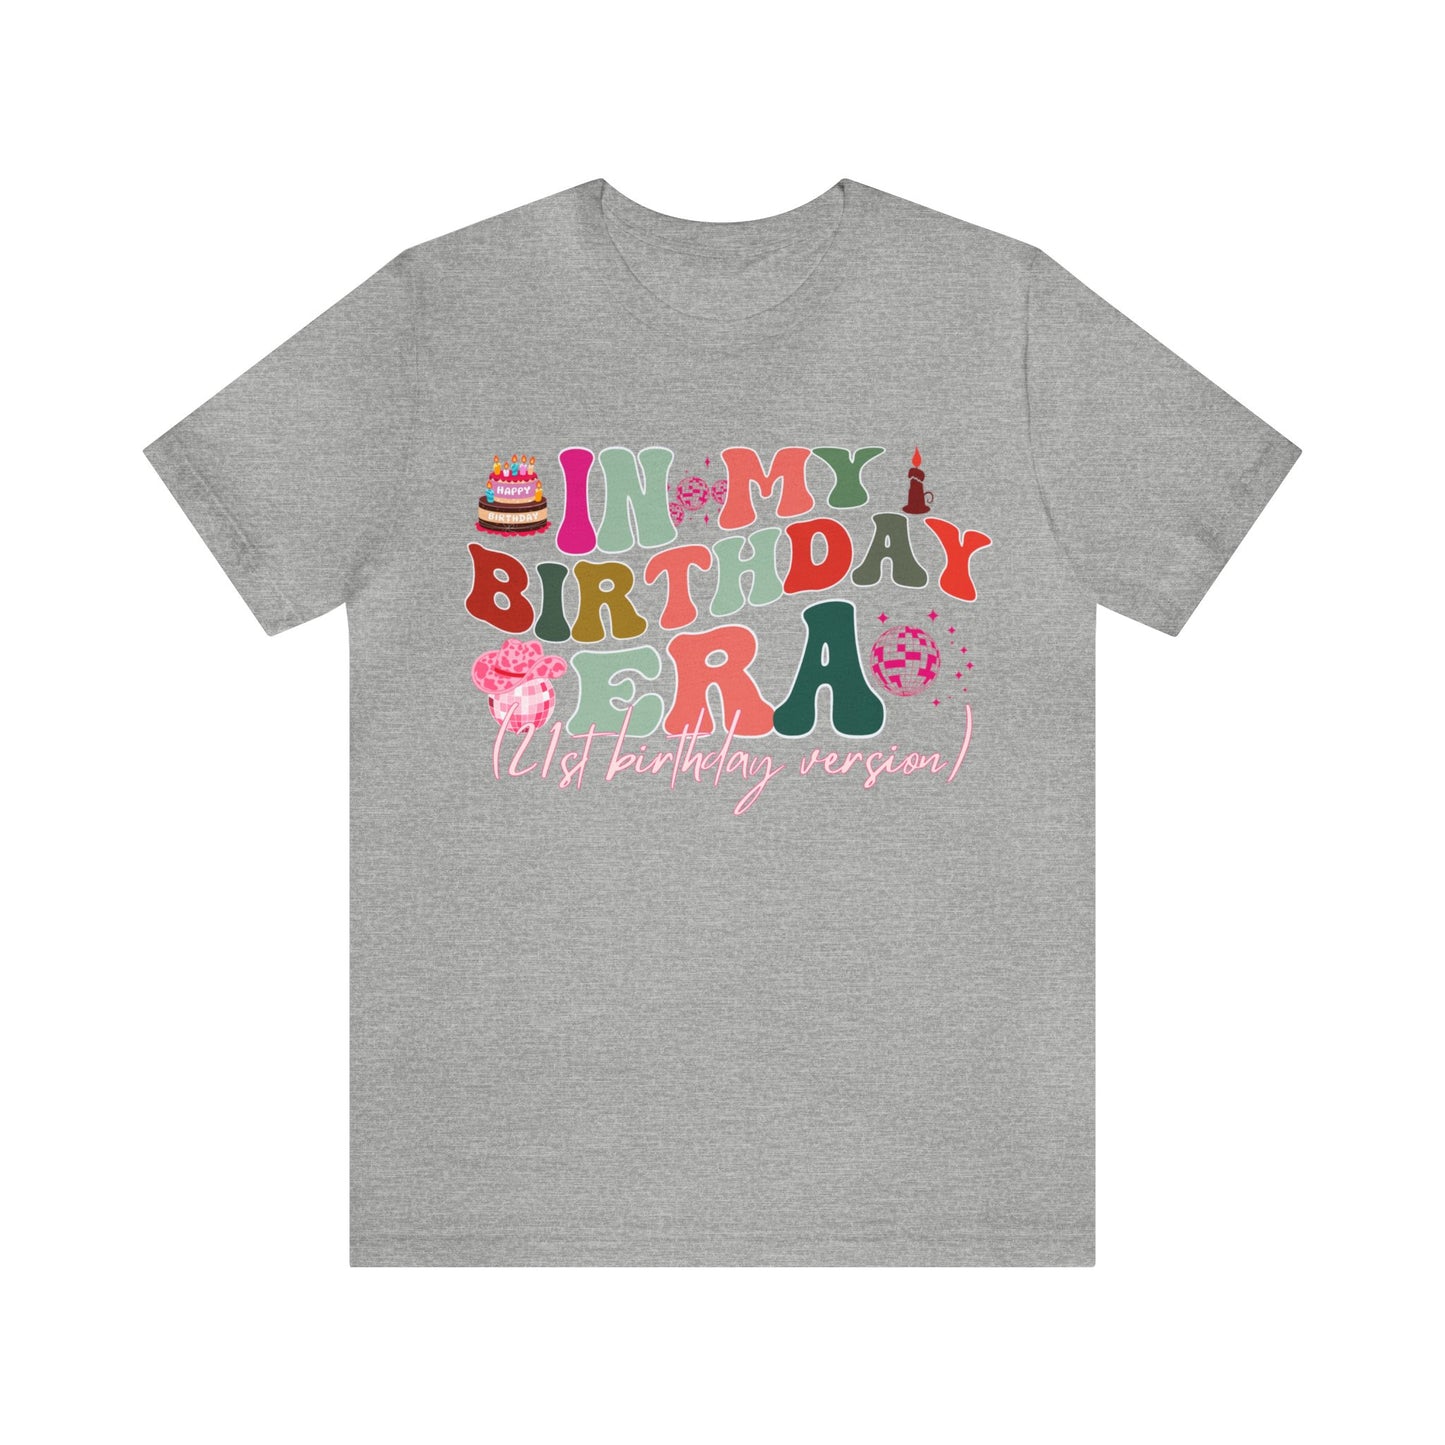 In My Birthday Era Shirt, Funny Birthday Shirt, Birthday Gift for Daughter, 21st Birthday Gift for Her, 21st Birthday Shirt, T856